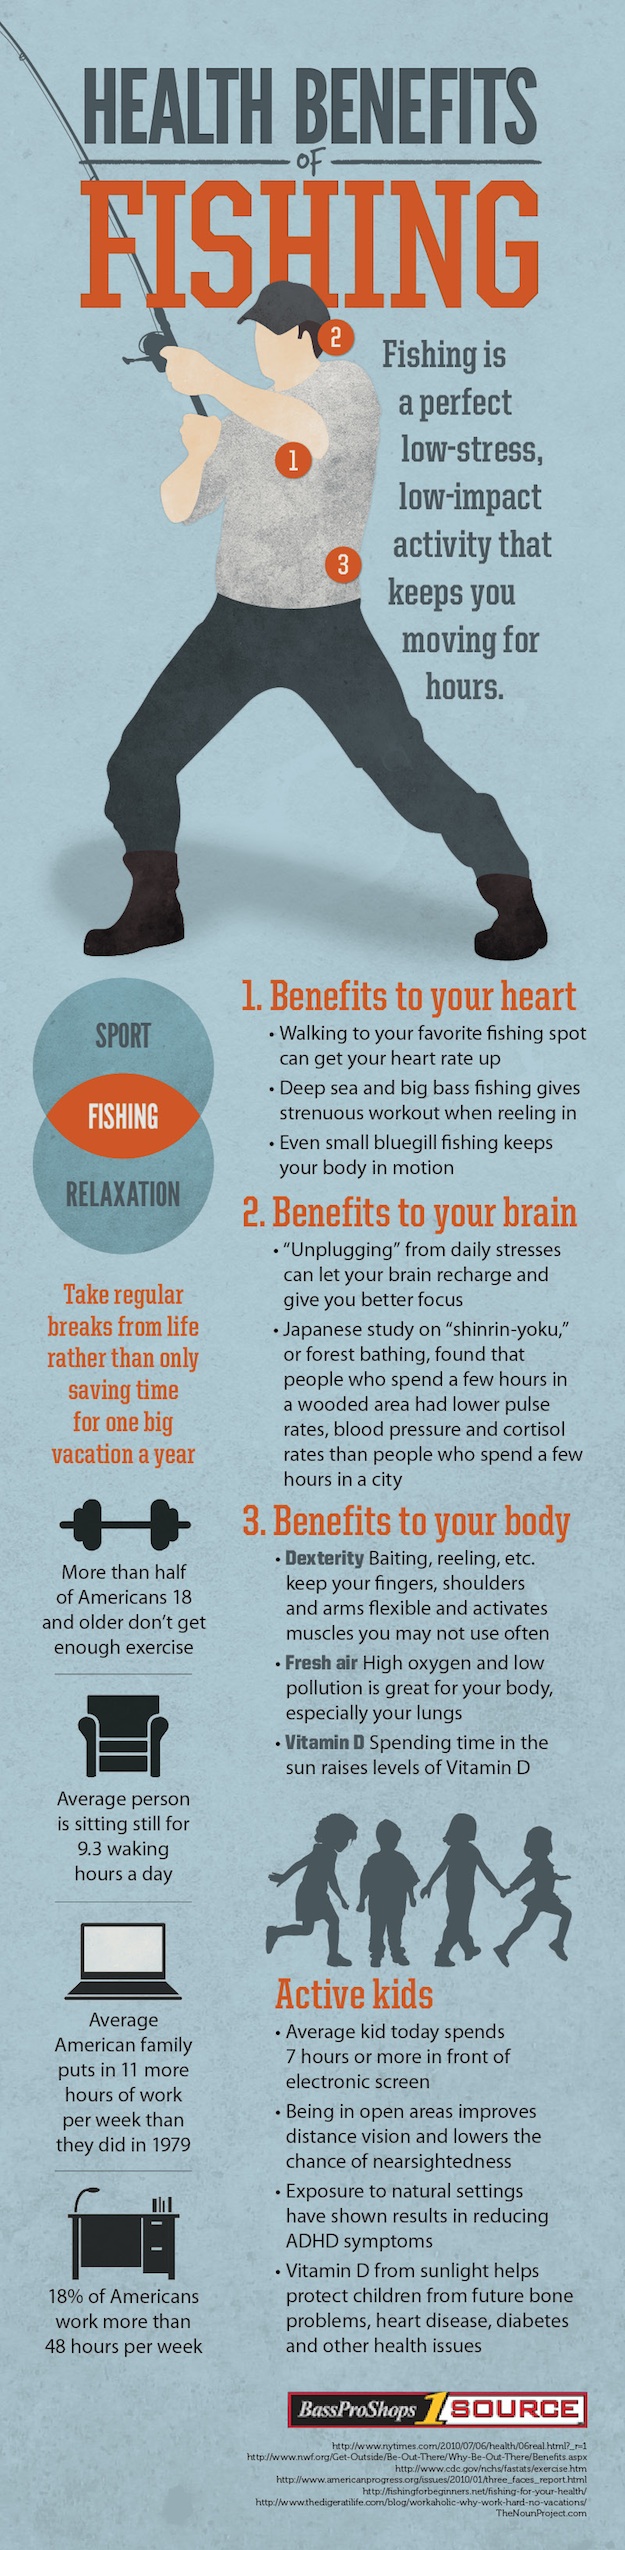 Health Benefits of Fishing Infographic